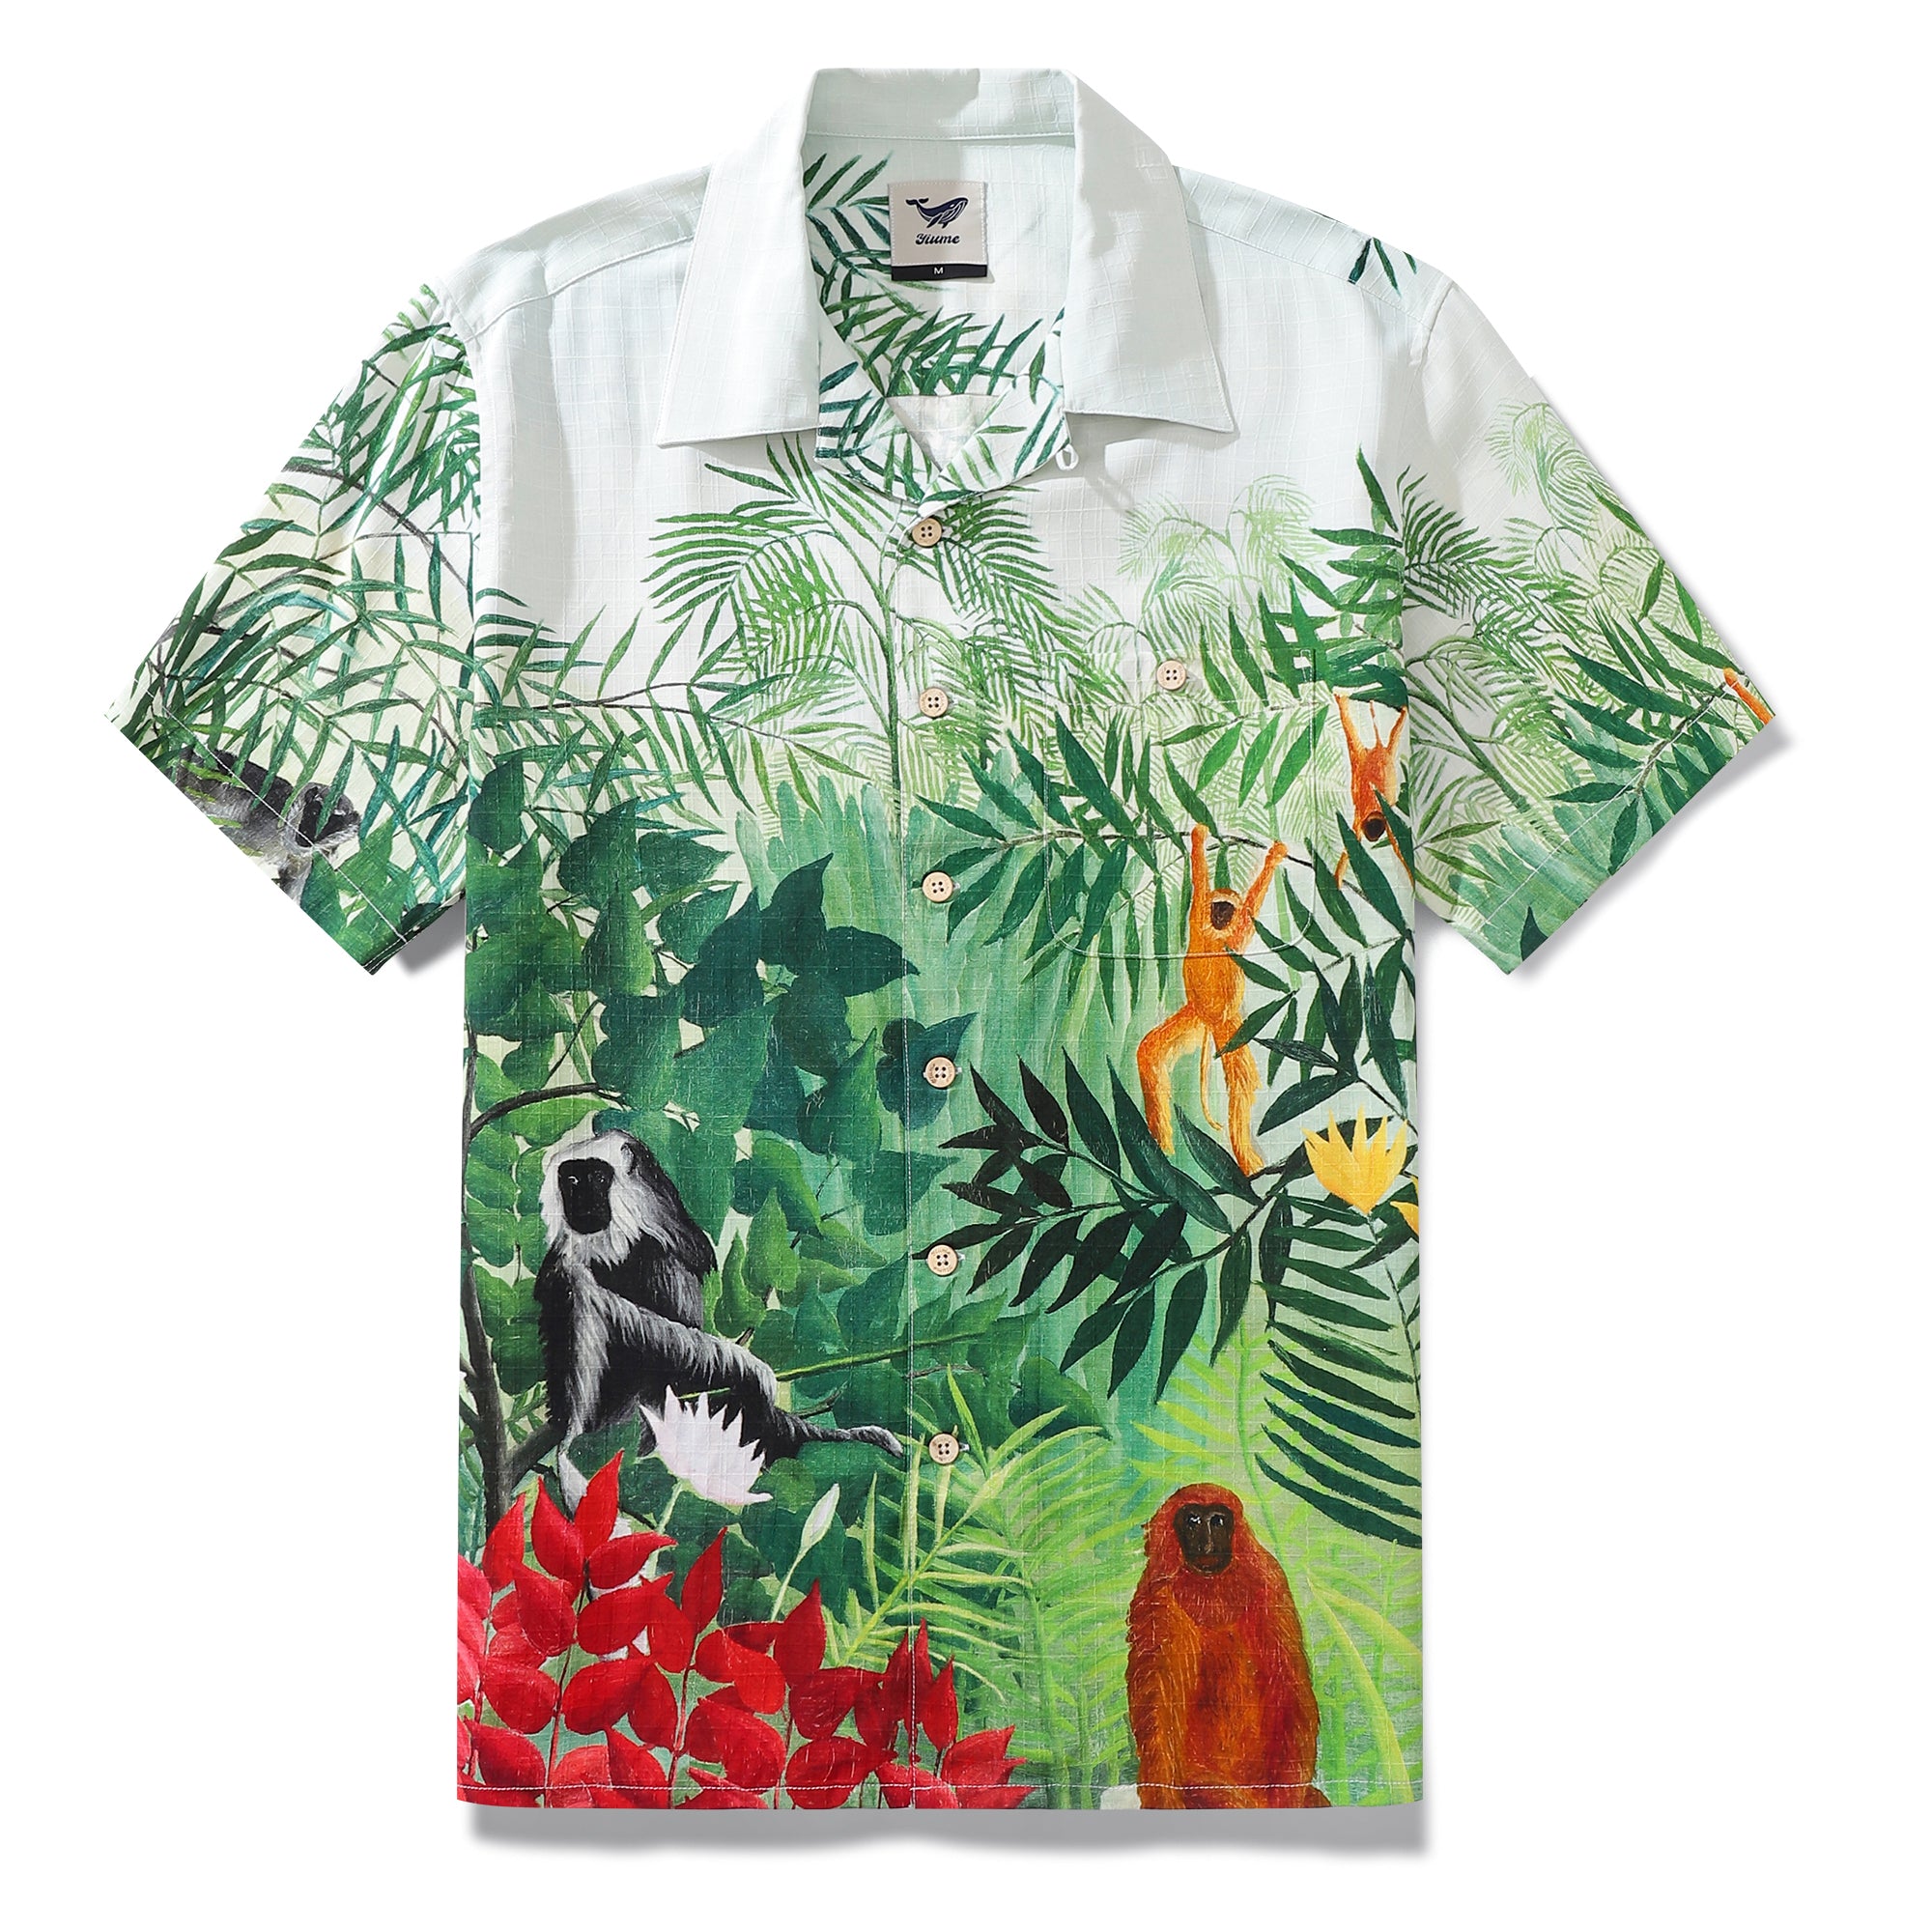 1950s Vintage Hawaiian Shirt For Tropical Forest and Monkeys Shirt Camp Collar 100% Silk